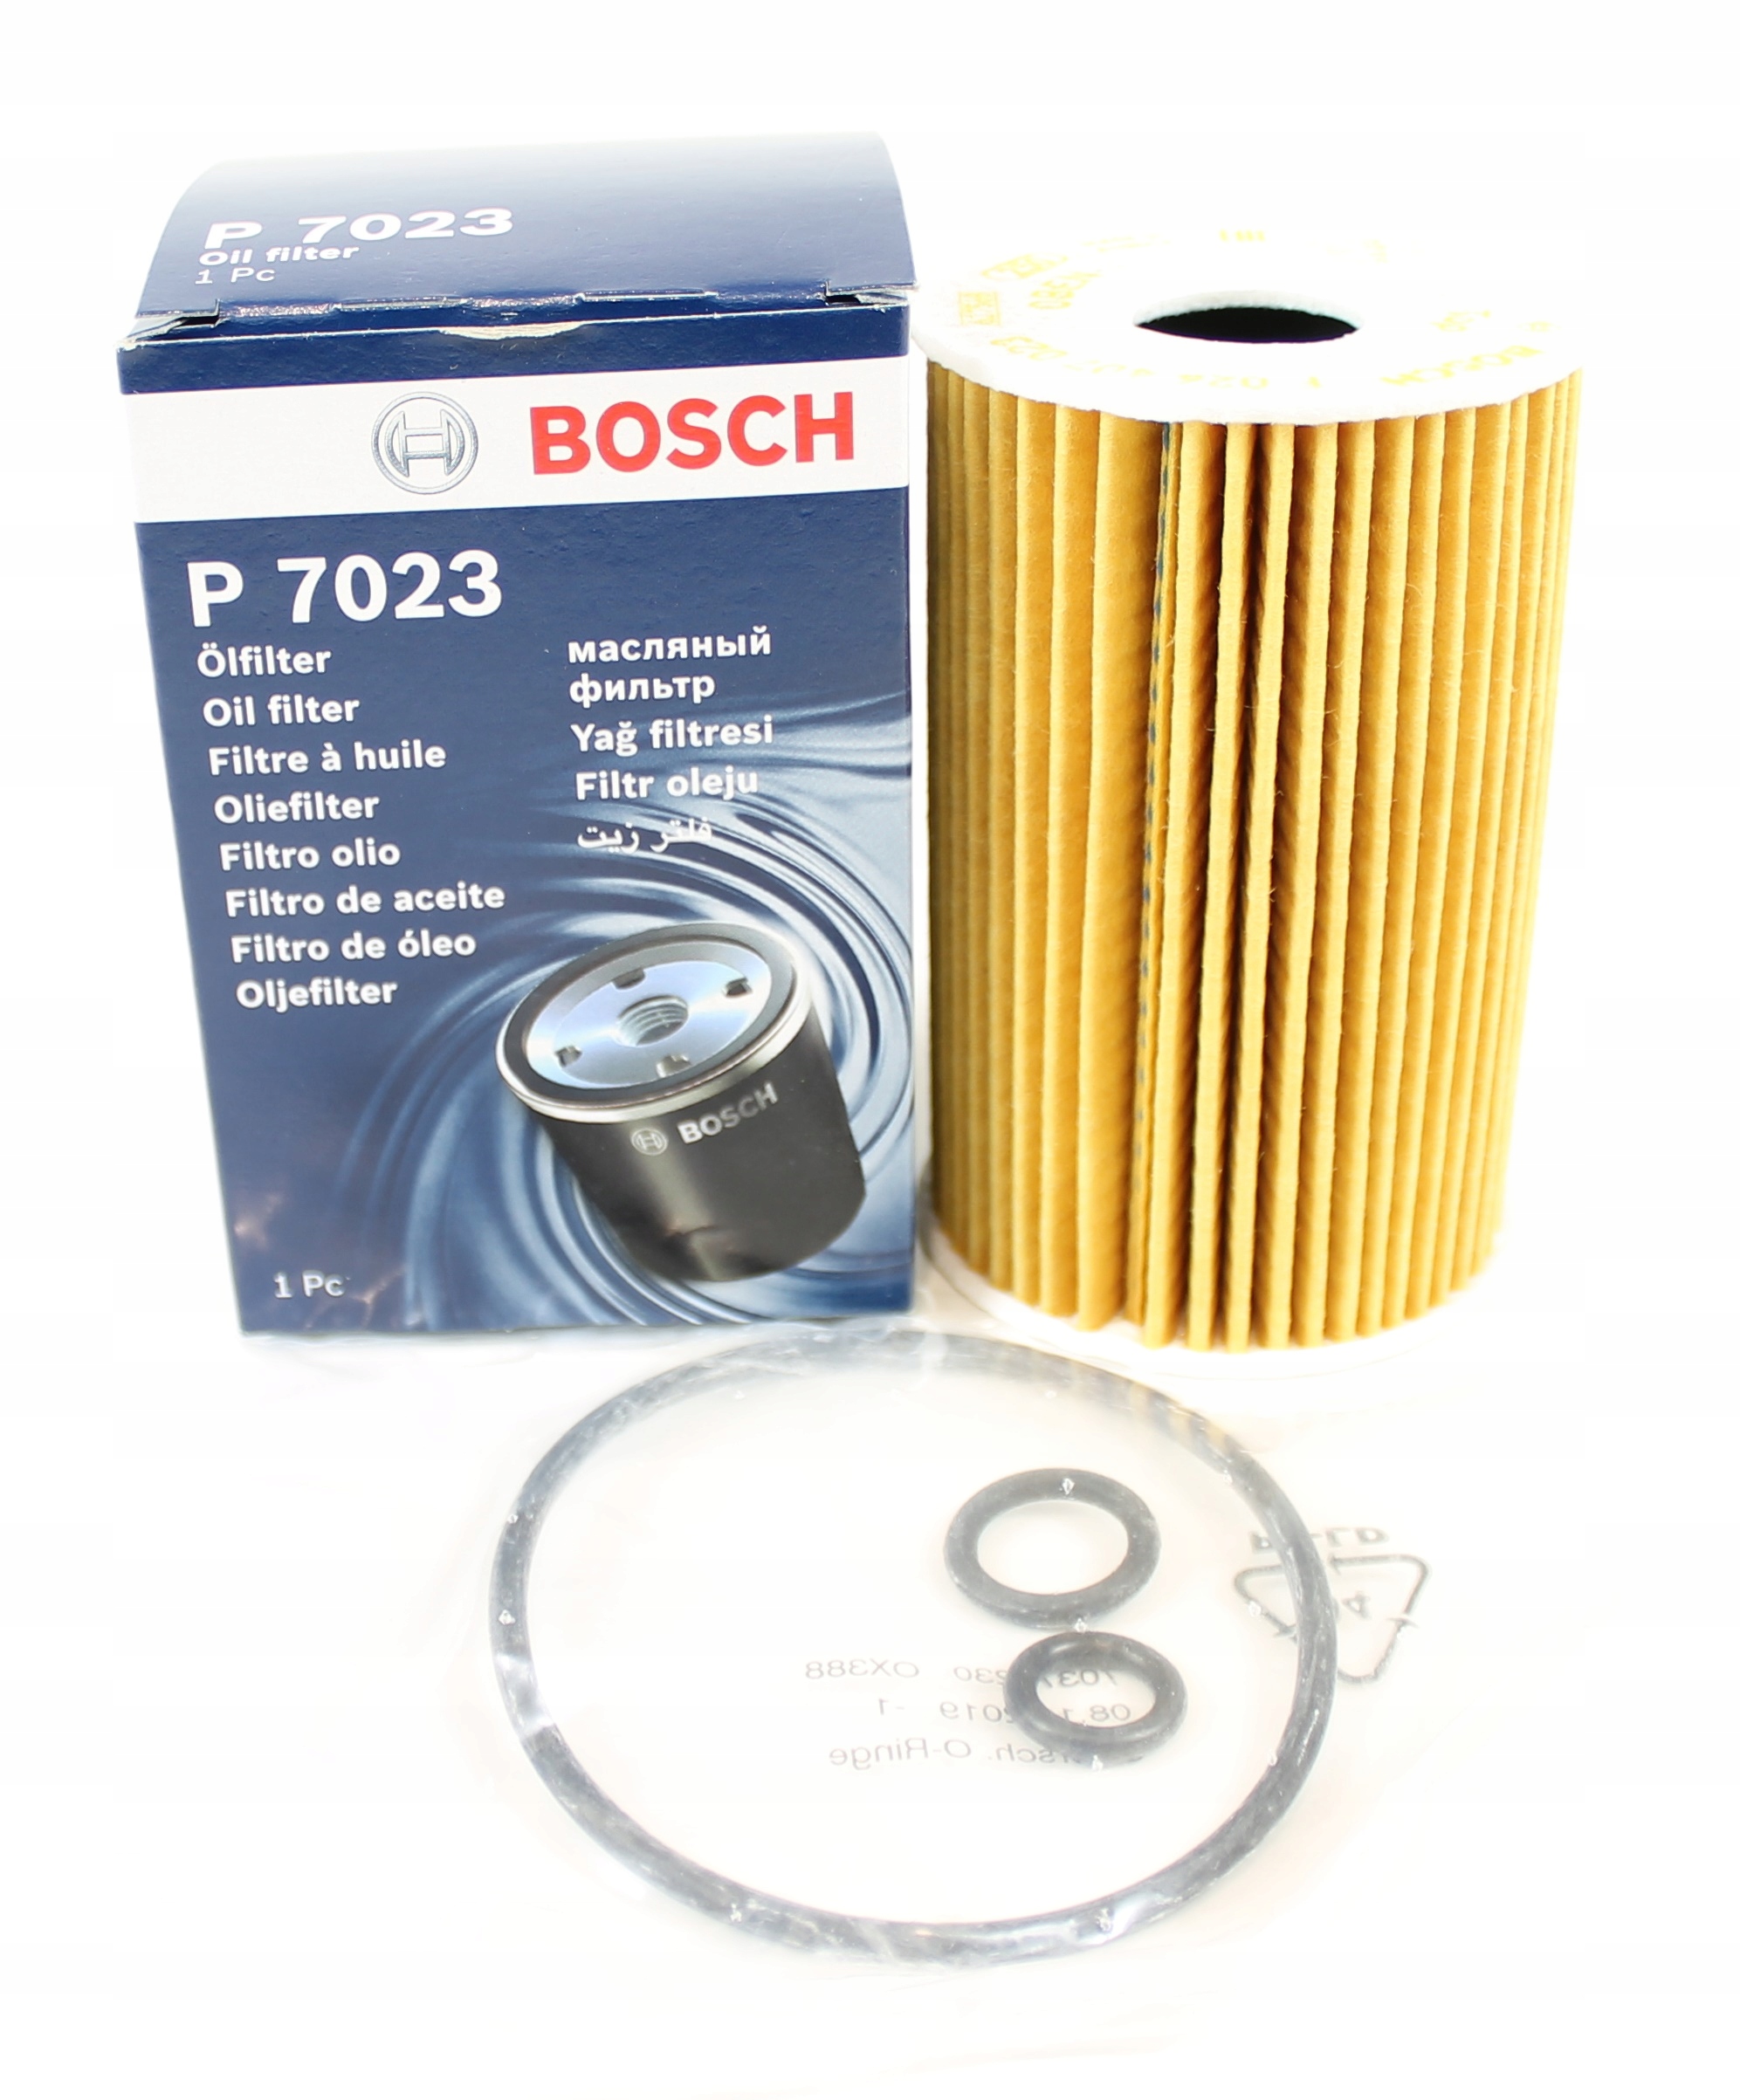  Bosch P7023 - Filtre à huile Auto